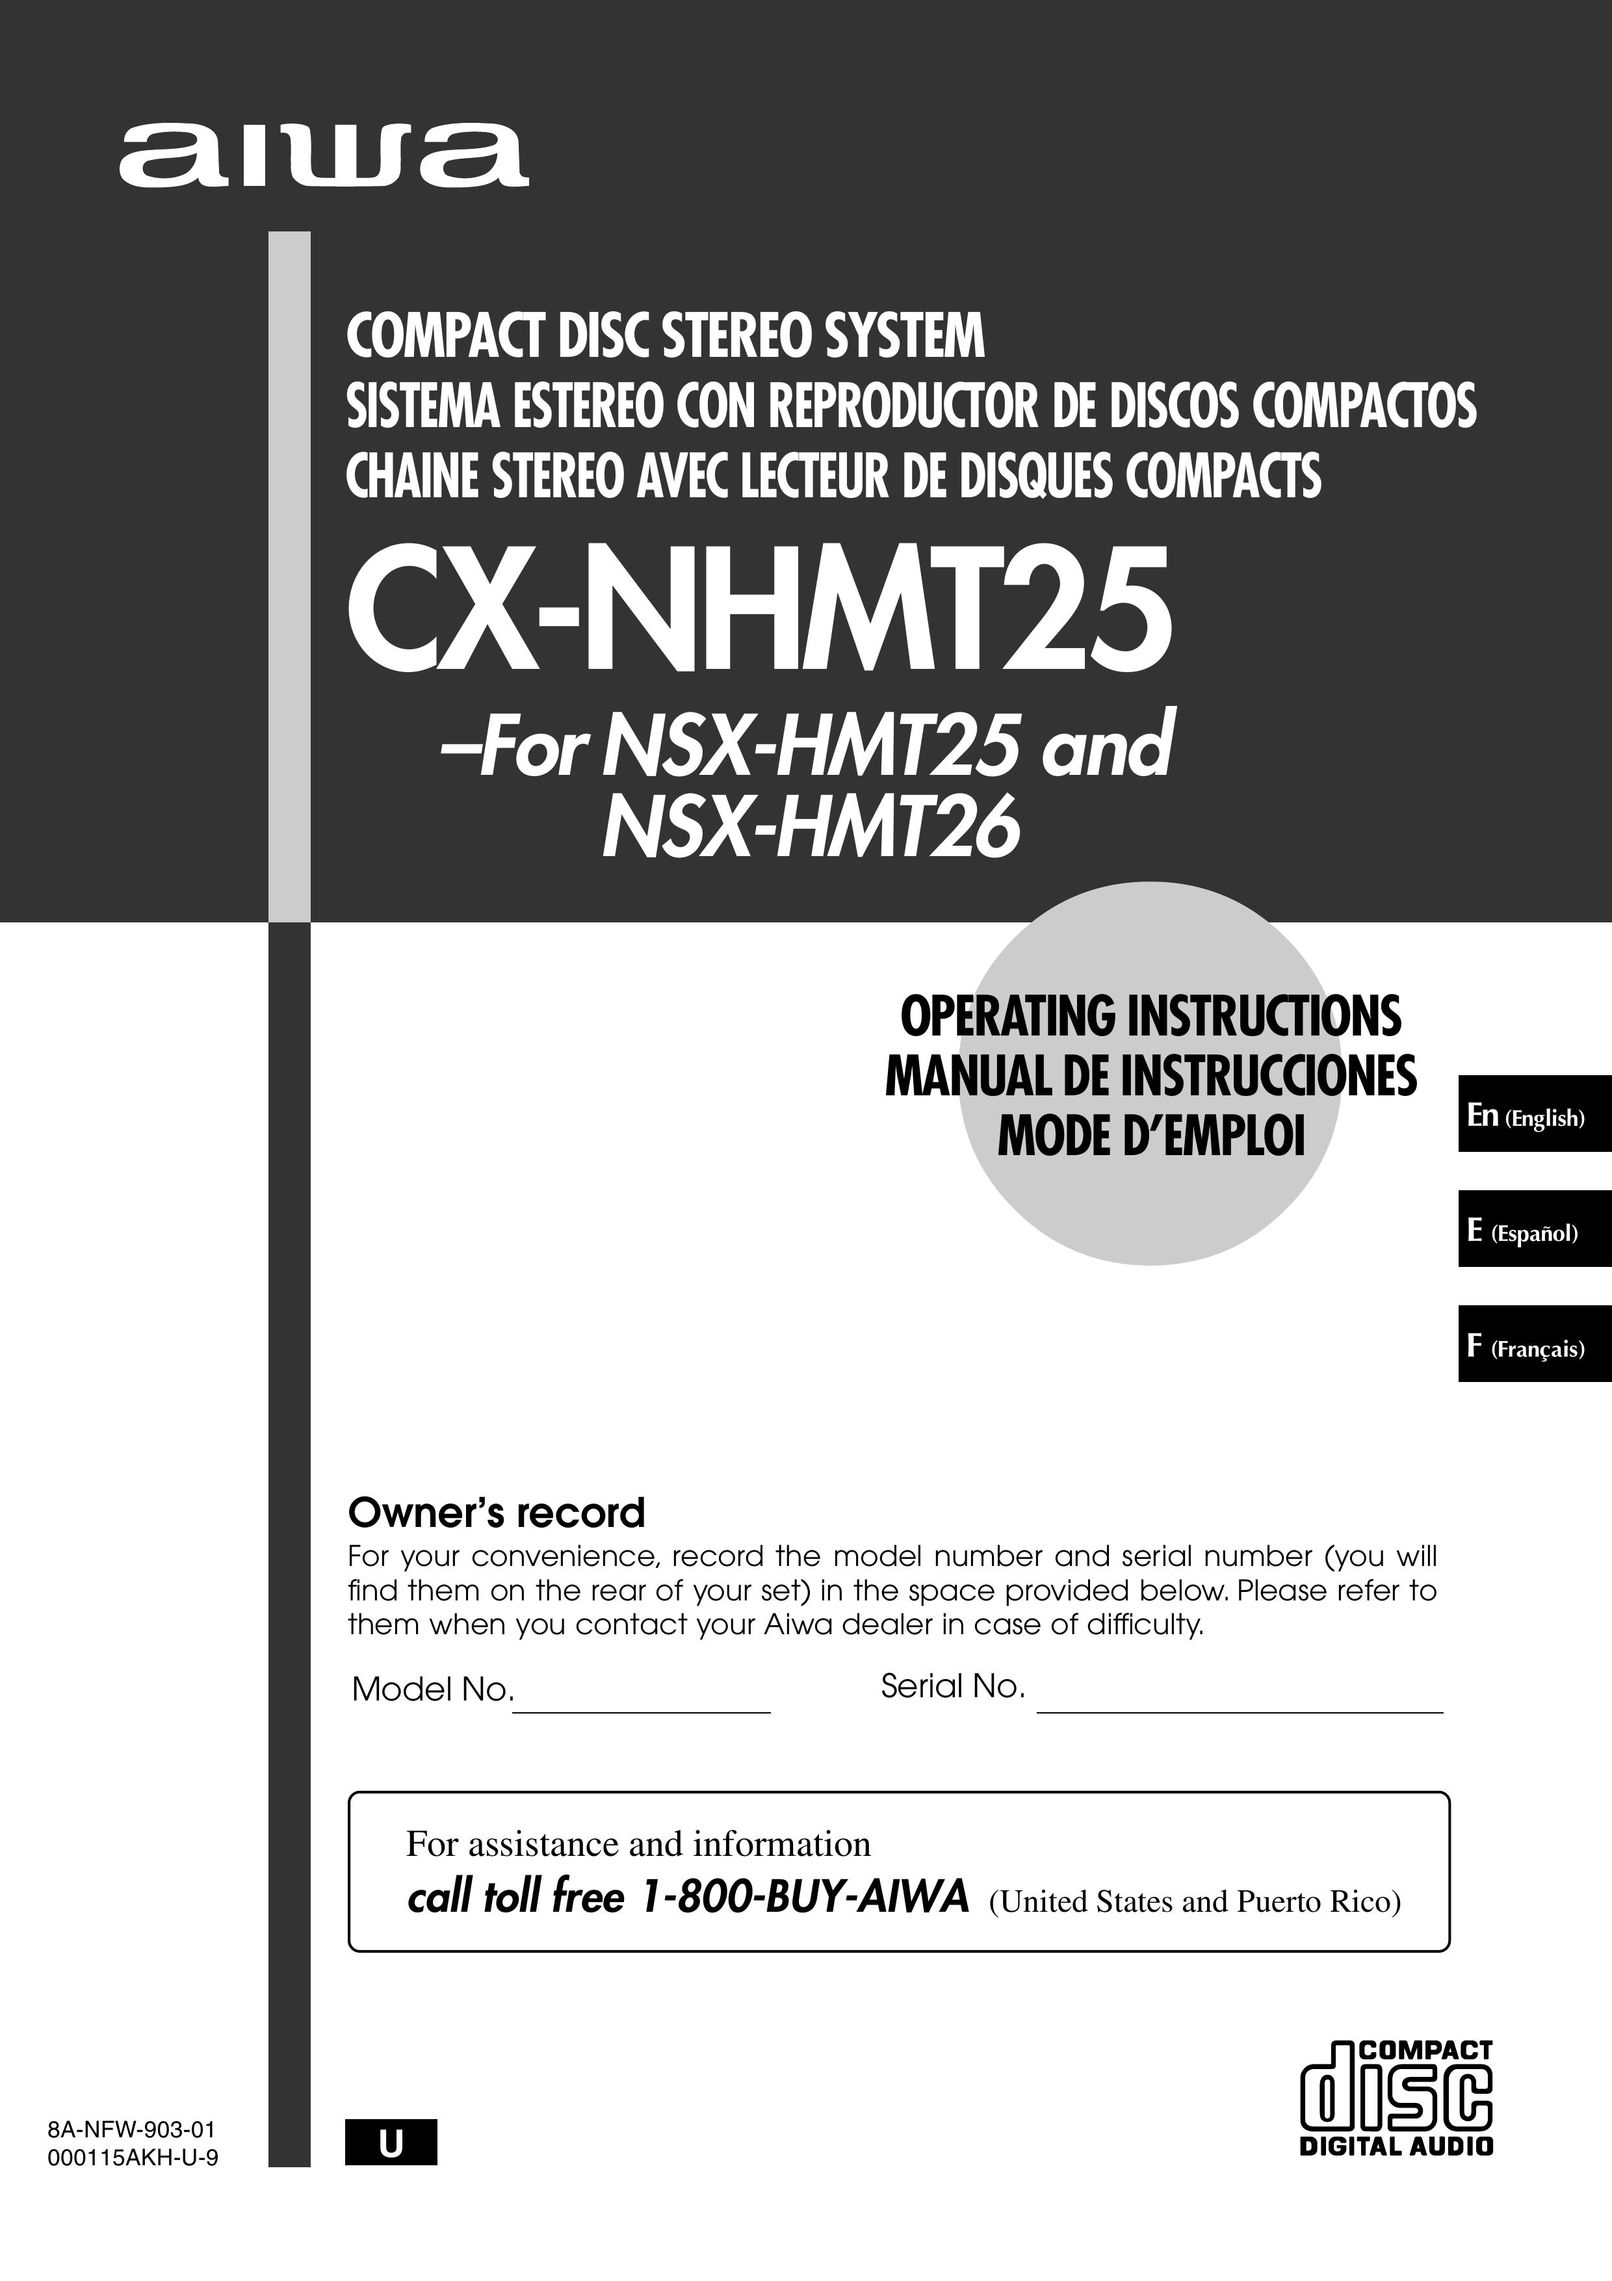 Aiwa CX-NHMT25 CD Player User Manual (Page 1)